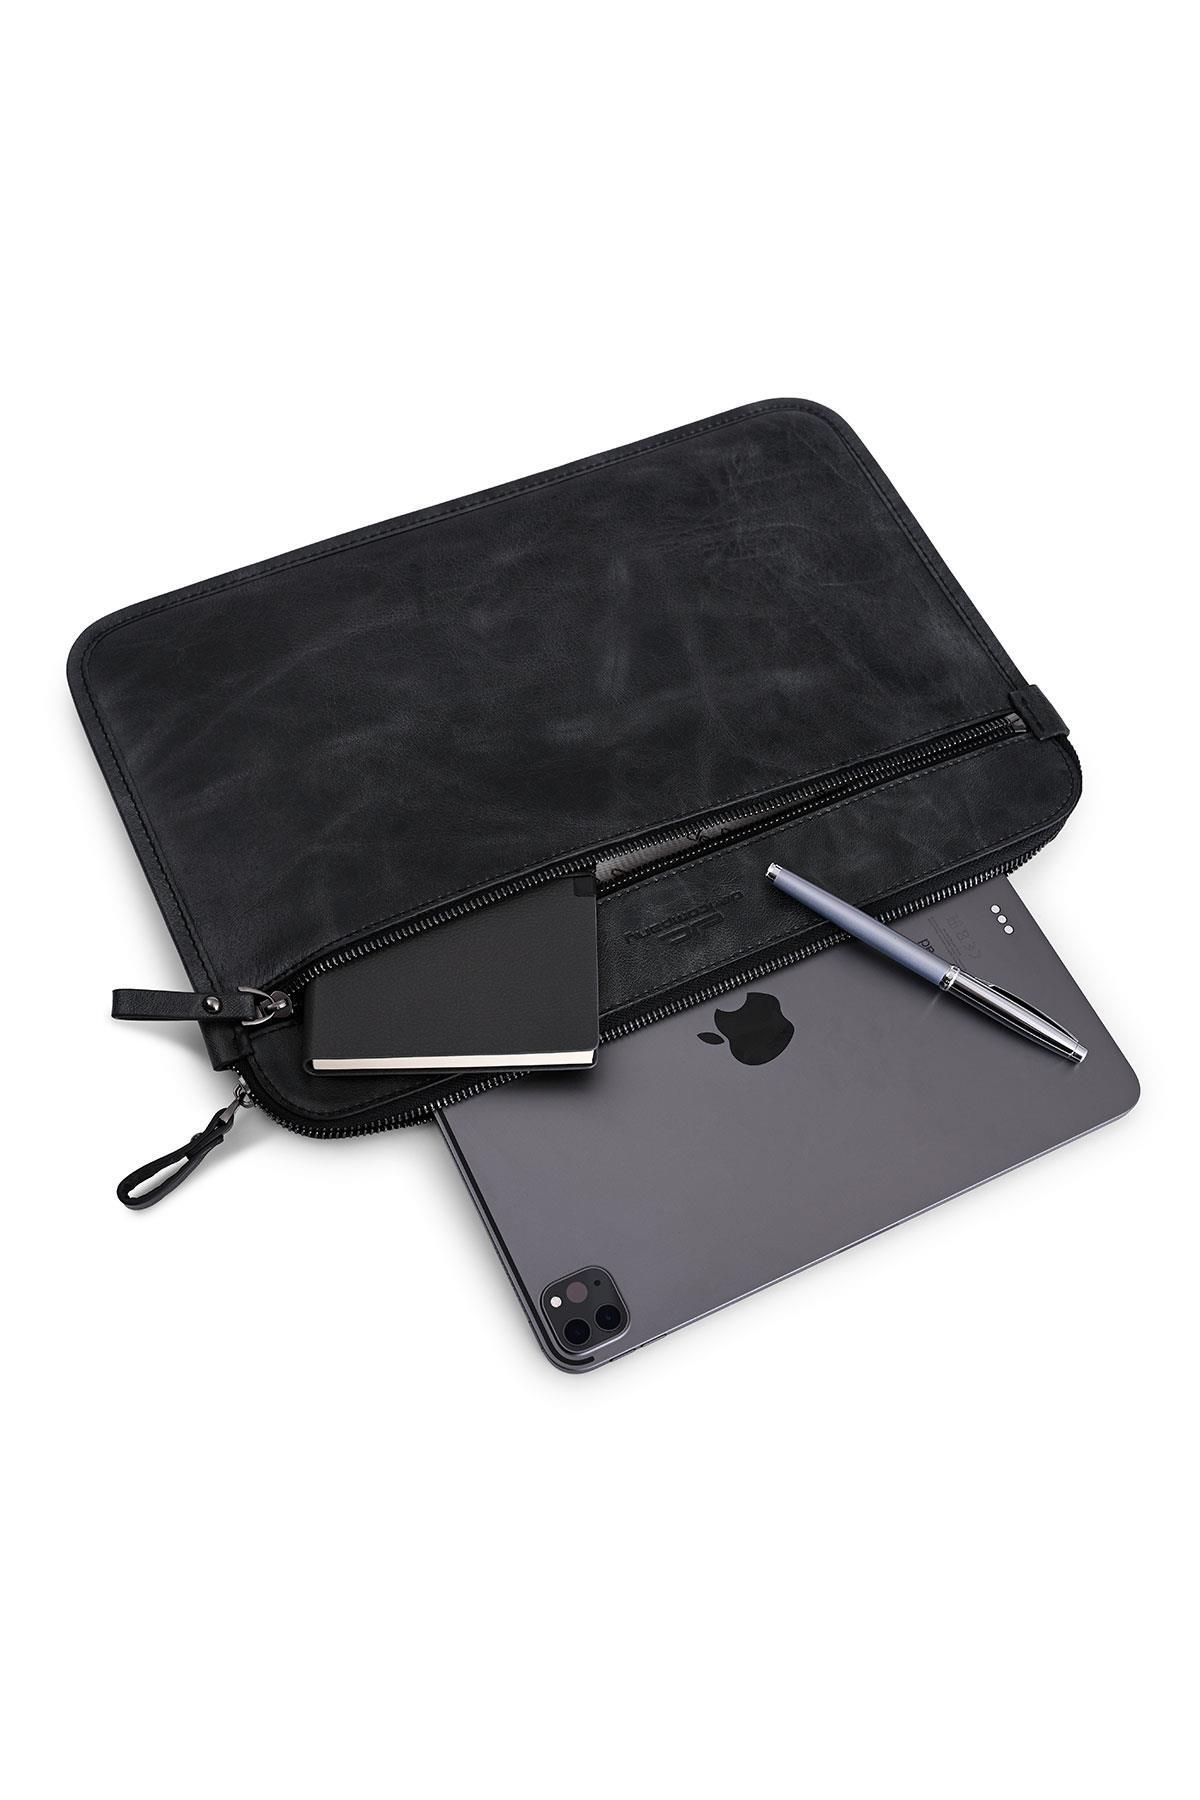 Deri Company Notebook/tablet Kılıfı Gri 400002